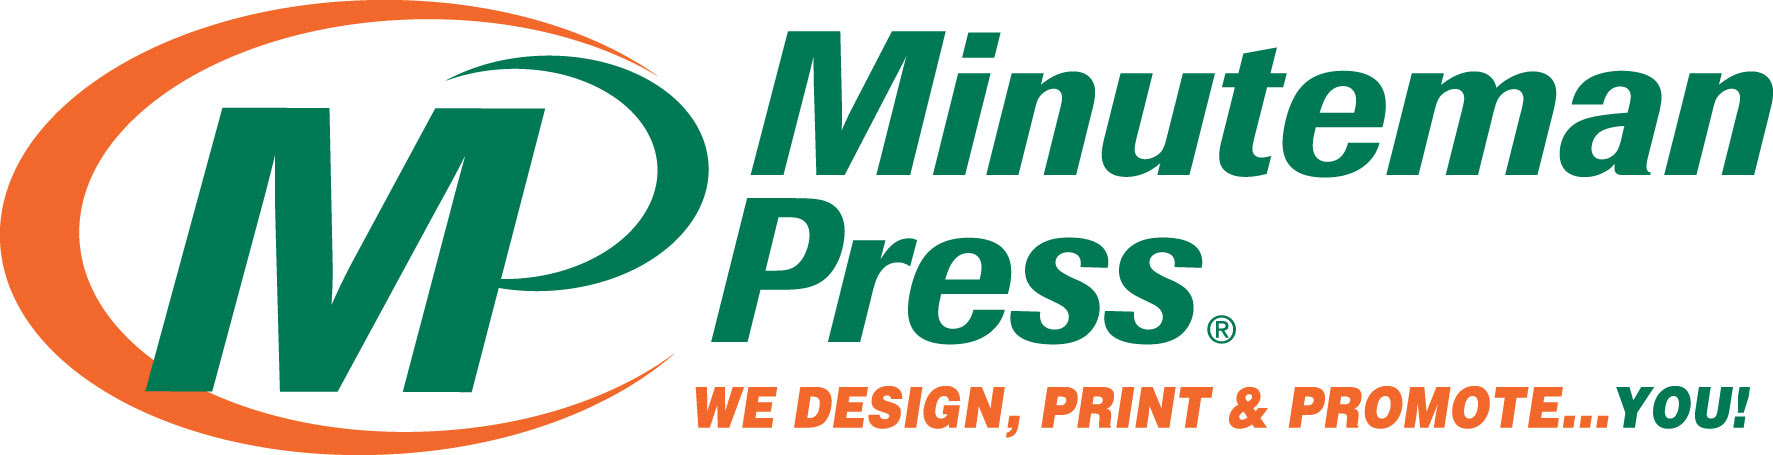 Printing Press Logo Images